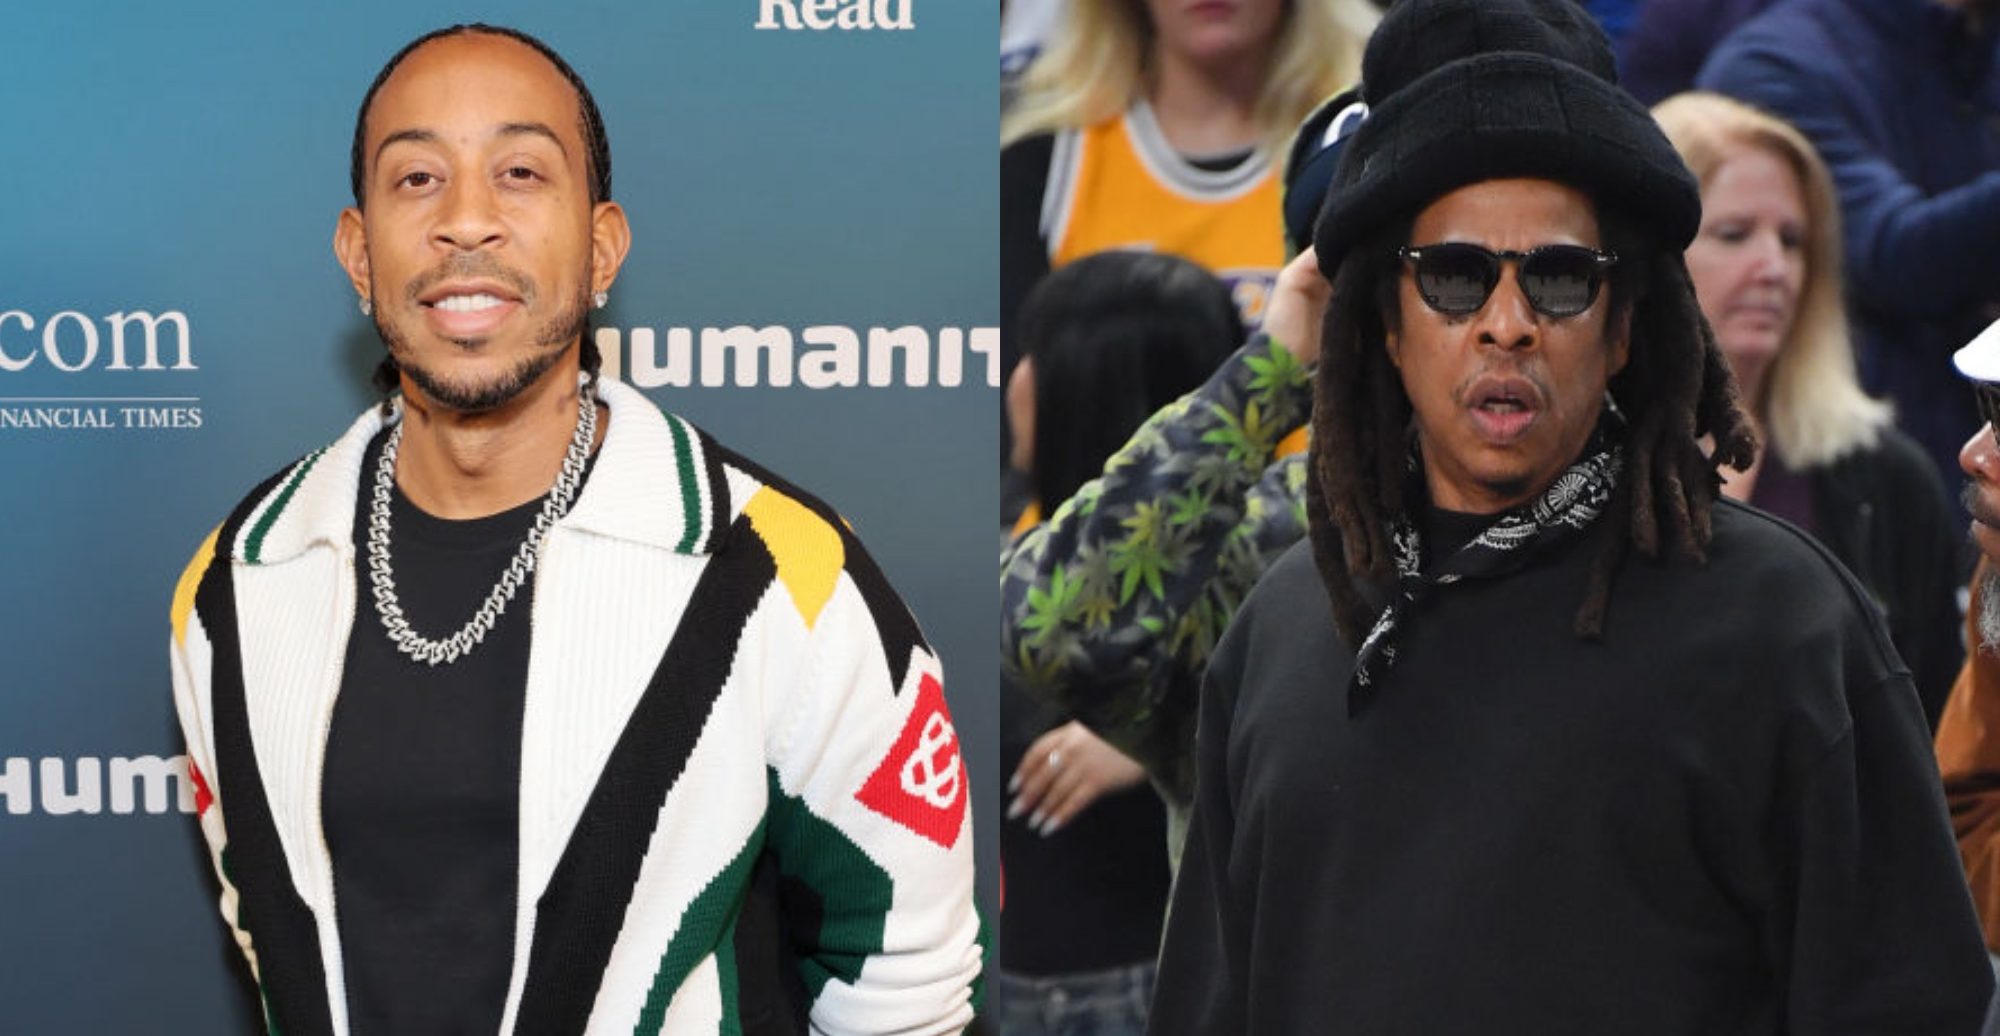 Ludacris & Jay-z